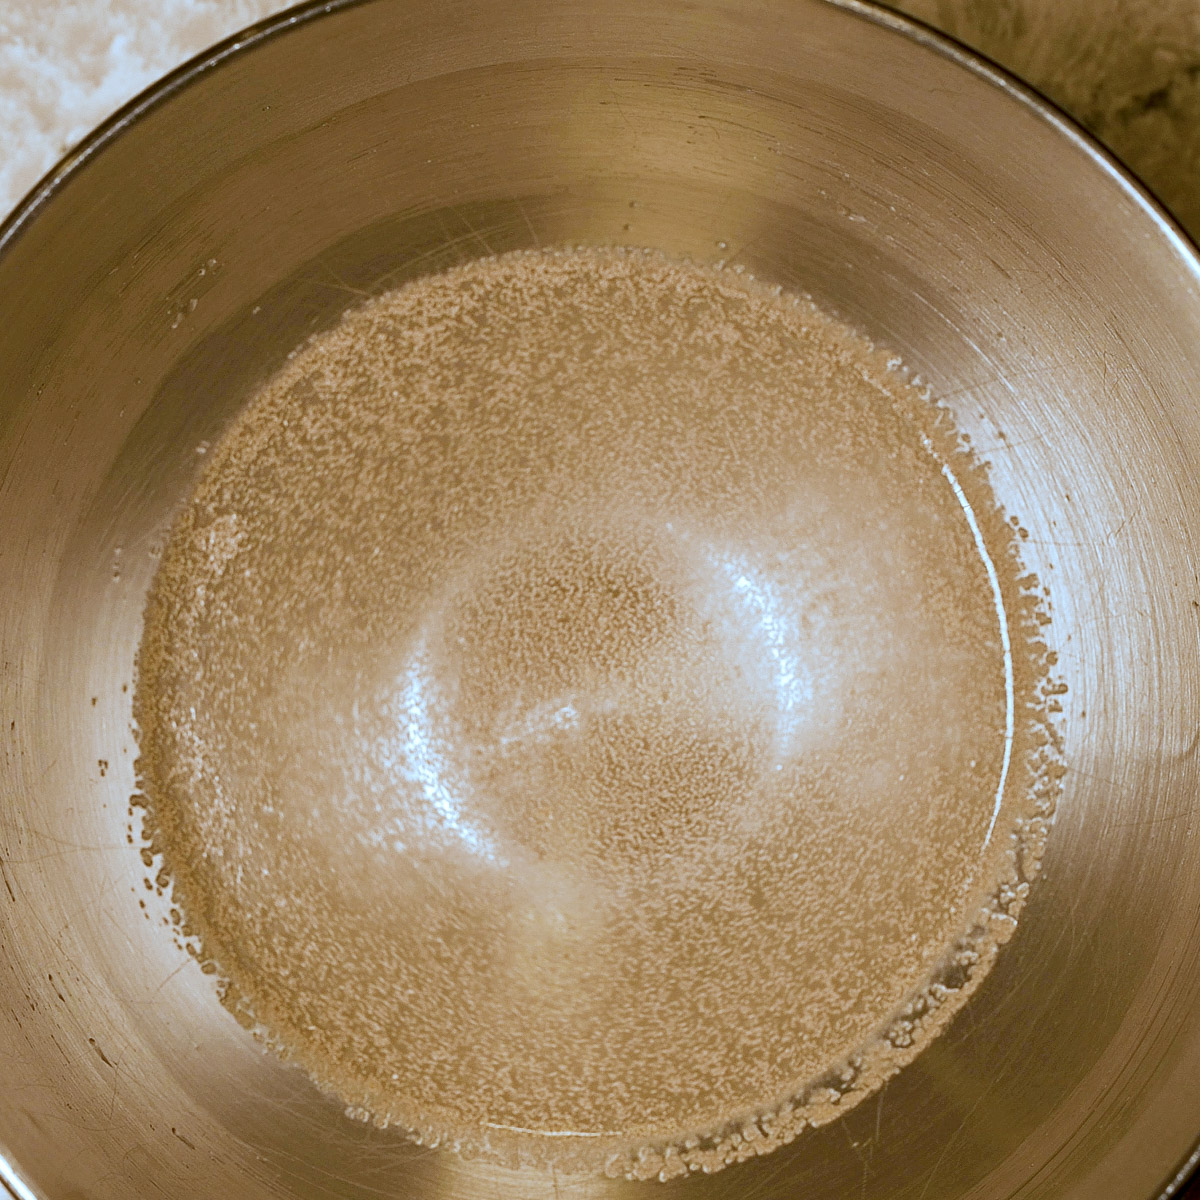 Let the yeast soak in warm water.